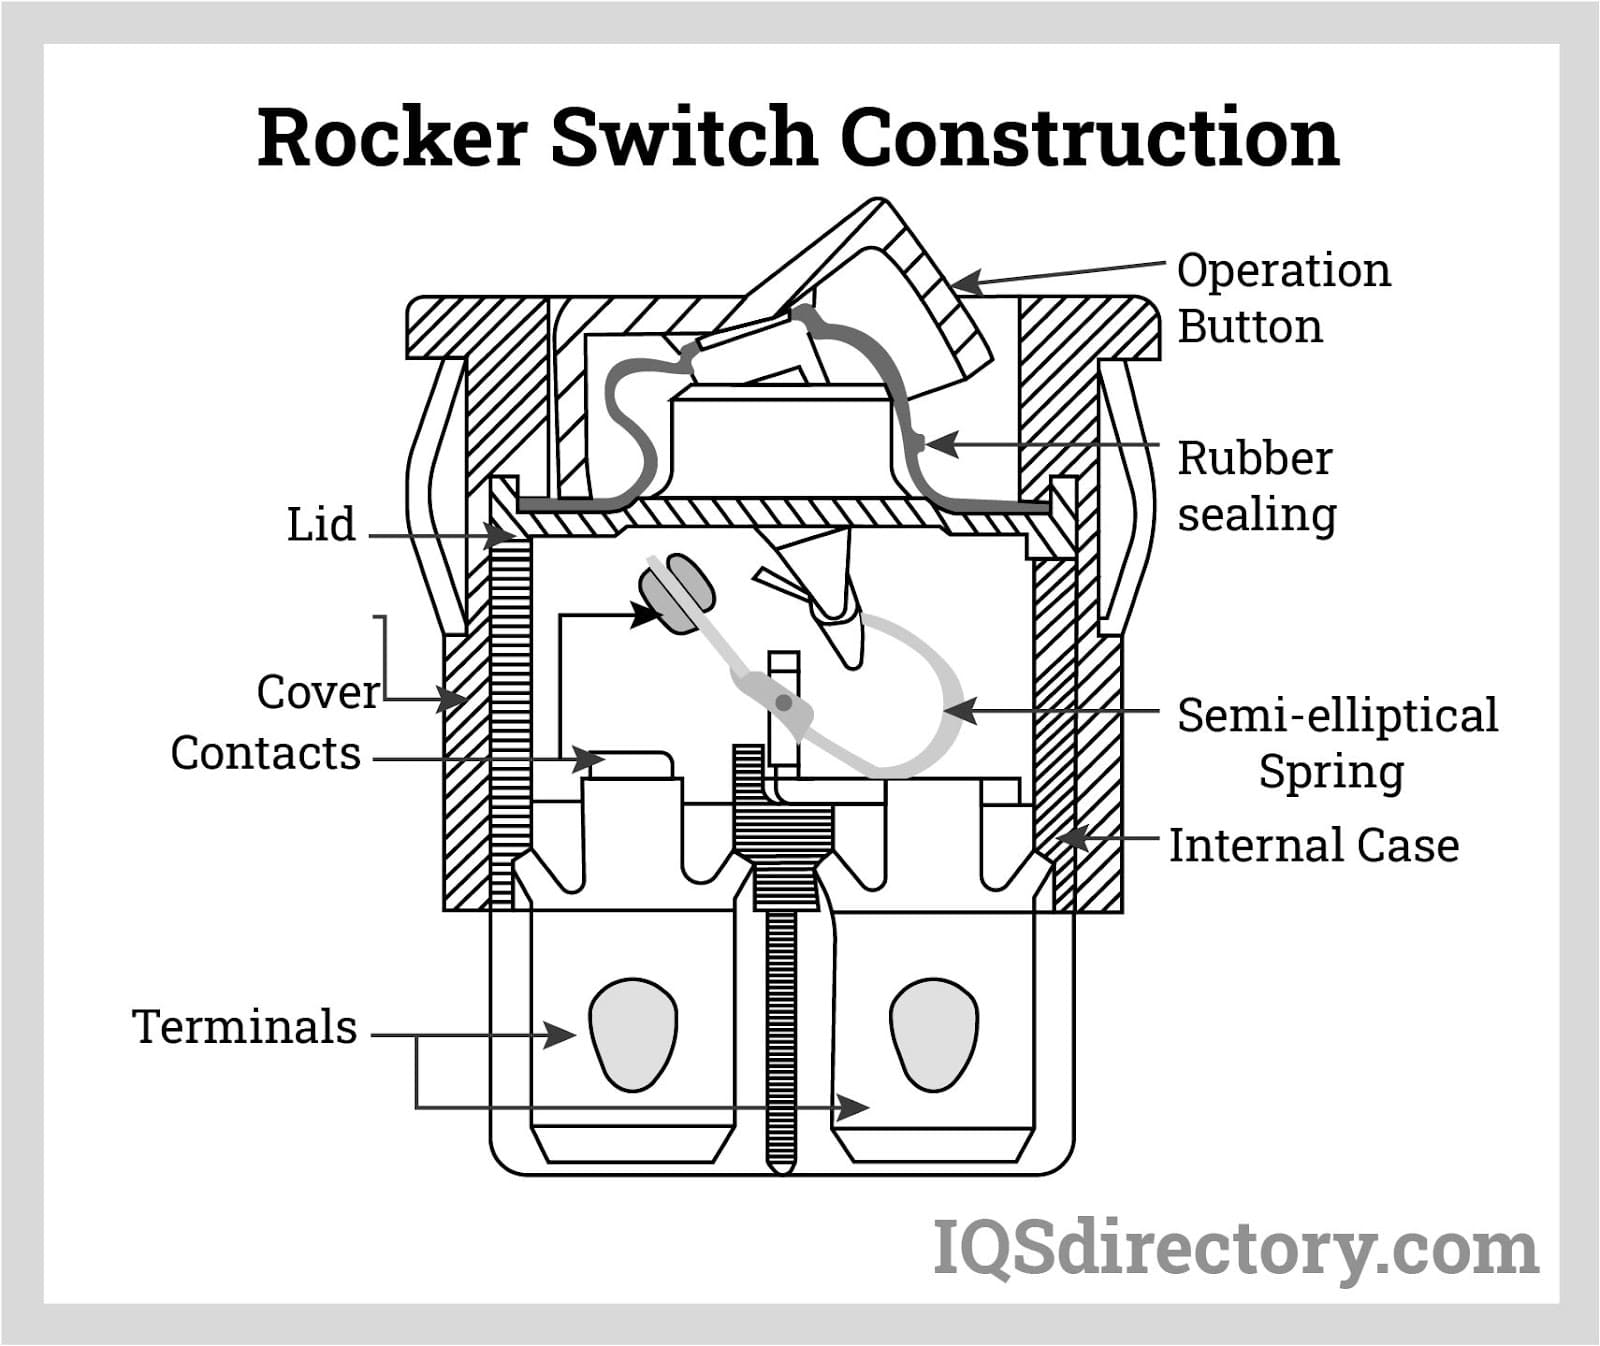 Rocker Switch Construction